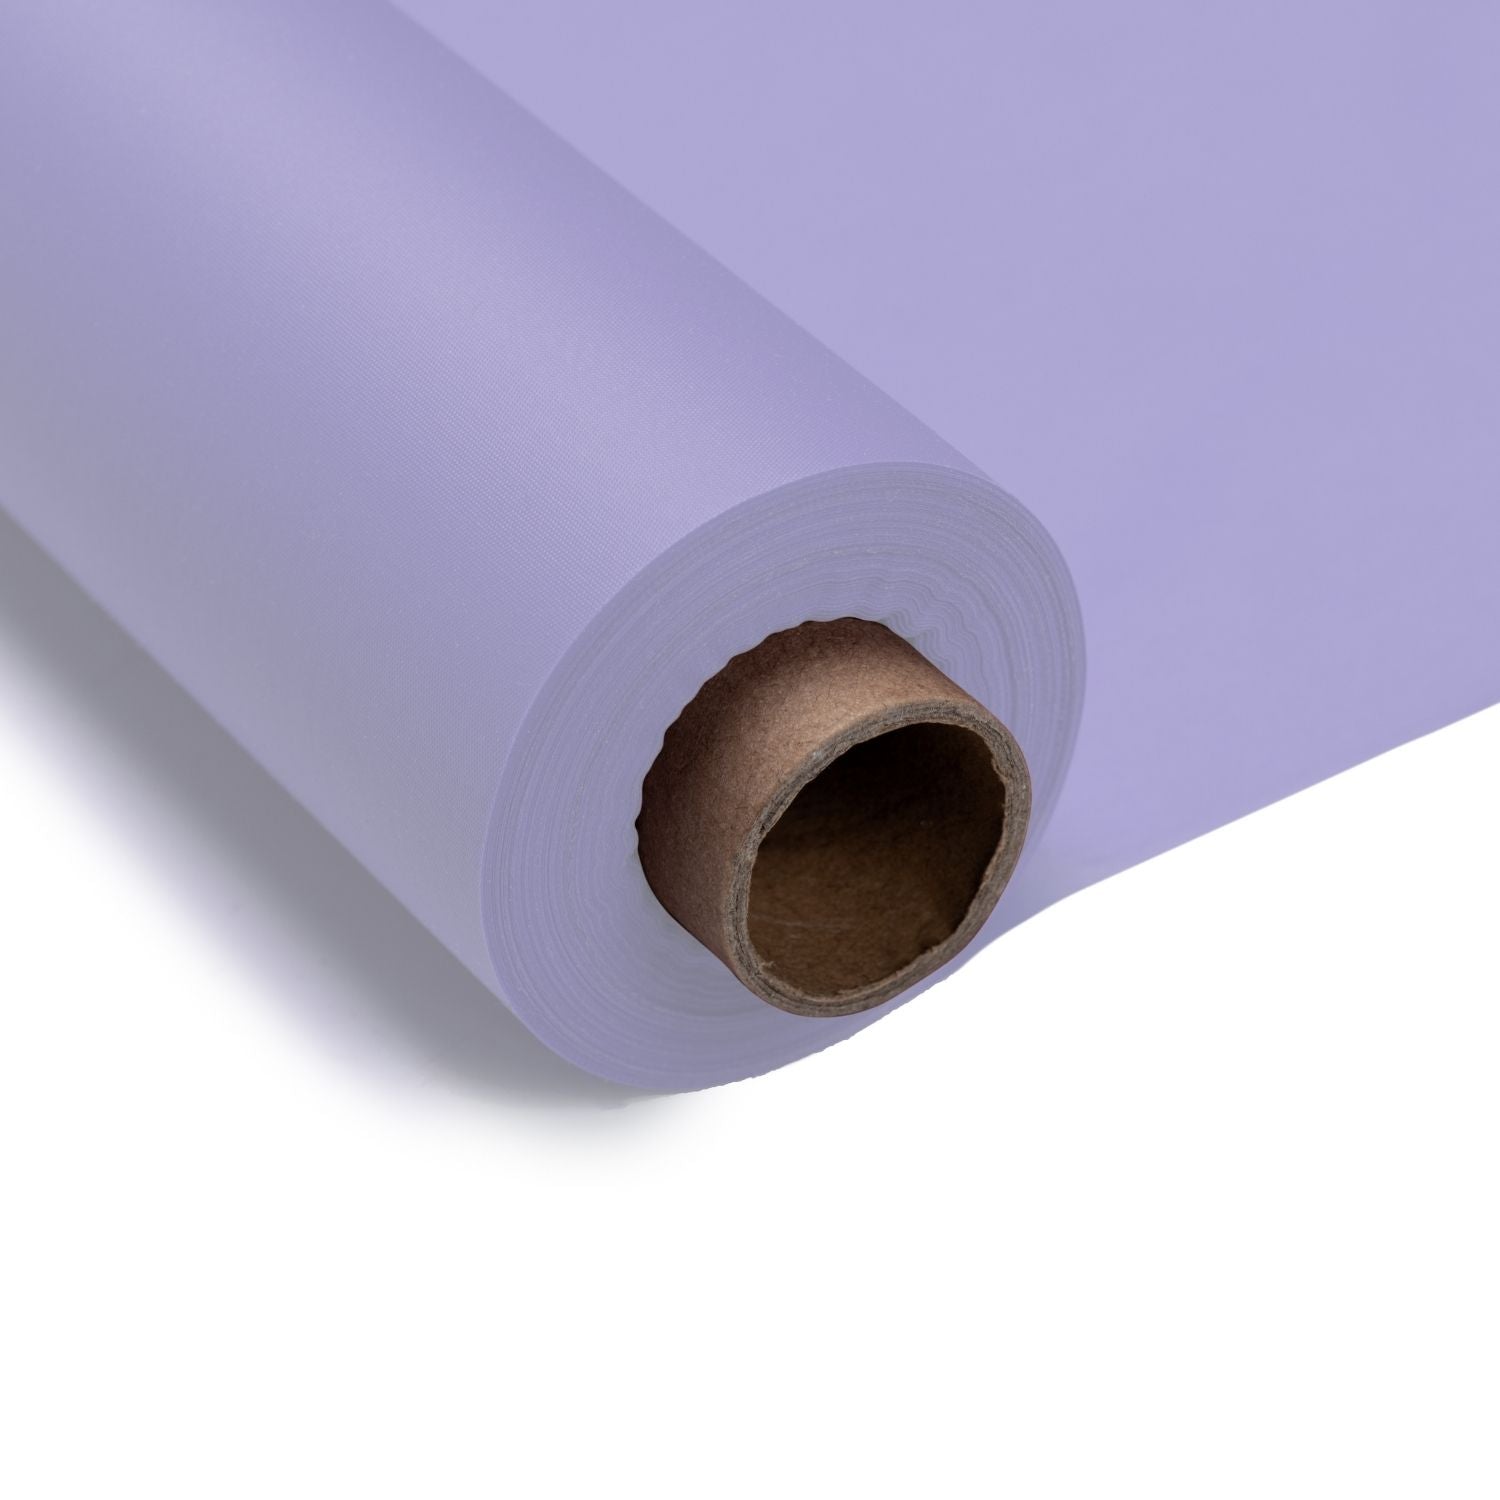 40 In. X 300 Ft. Premium Lavender Plastic Table Roll | 4 Pack